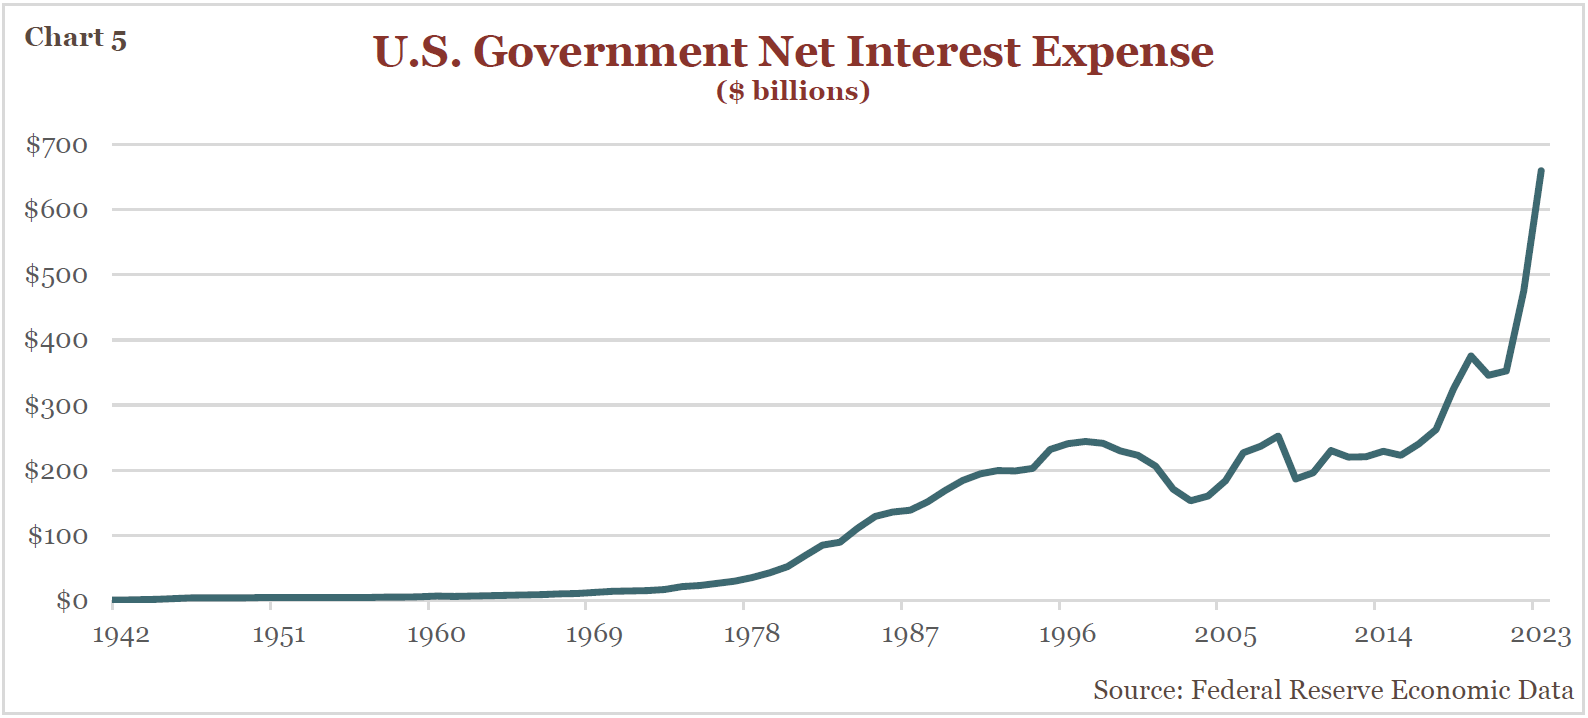 U.S. Government Net Interest Expense